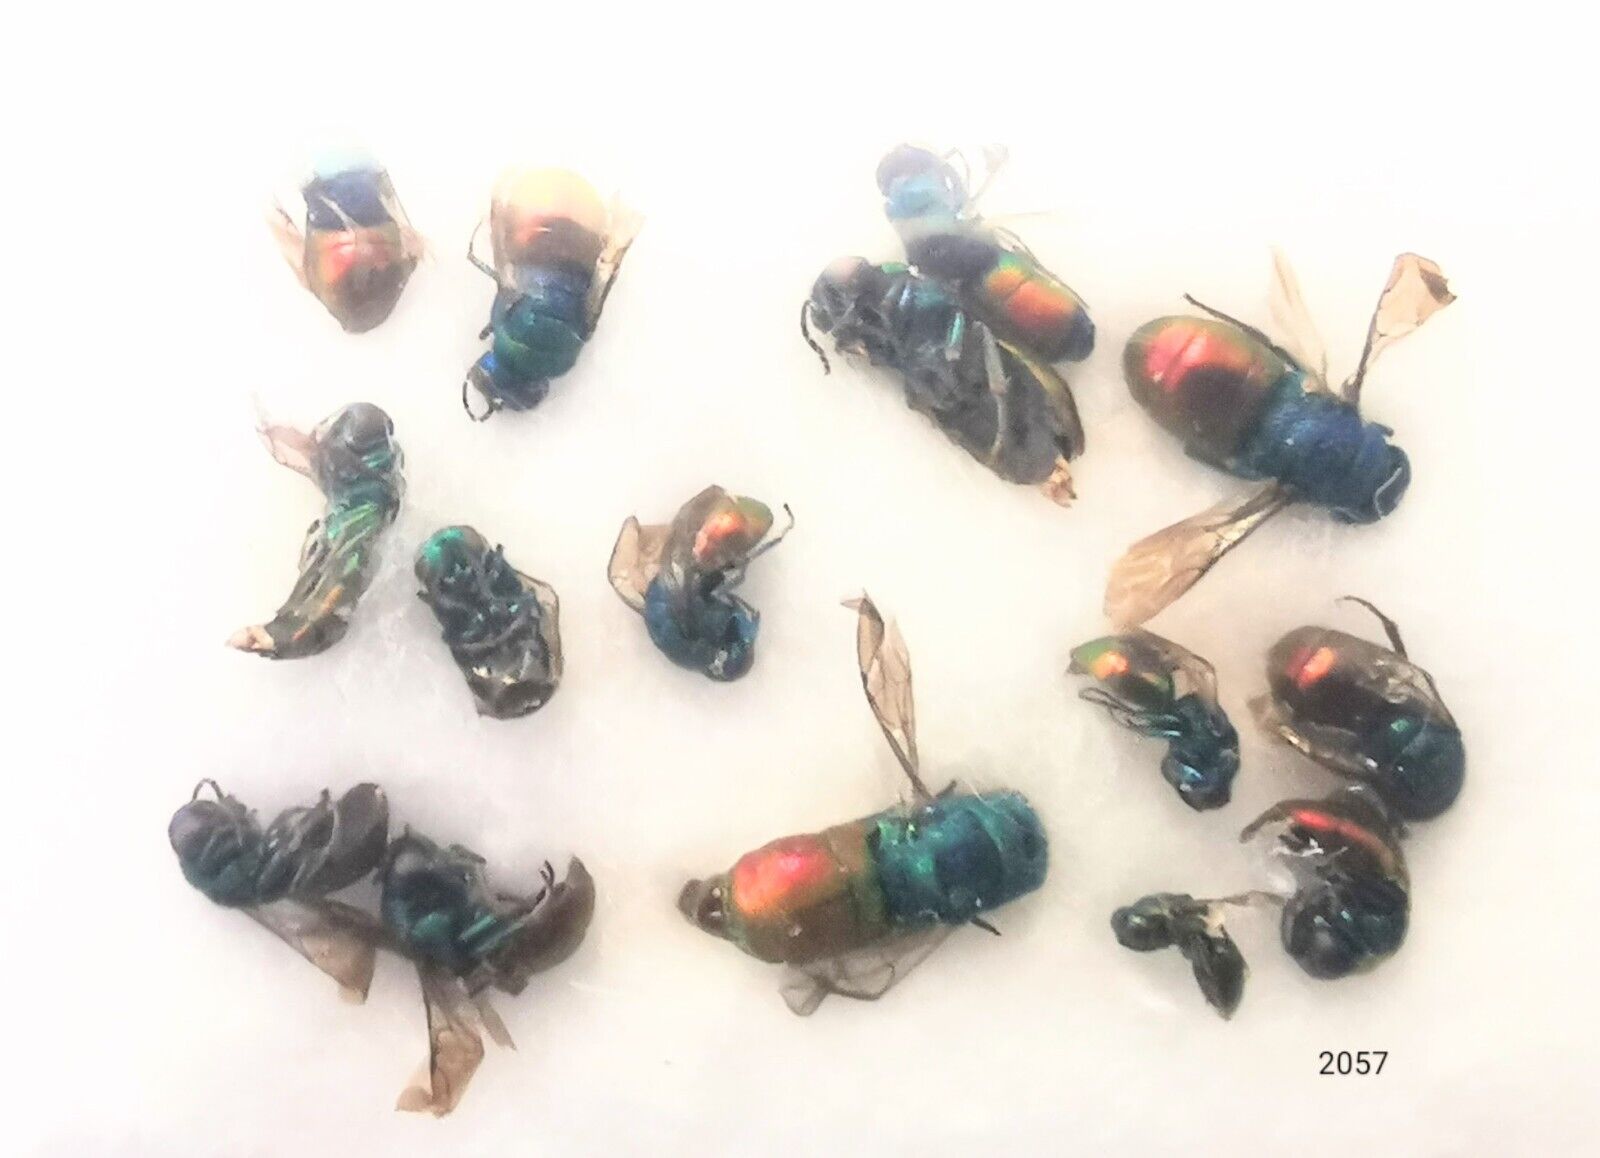 Hymenoptera Chrysididae MIXED 3-8mm 15pcs A1 or A- from Italy - #2057